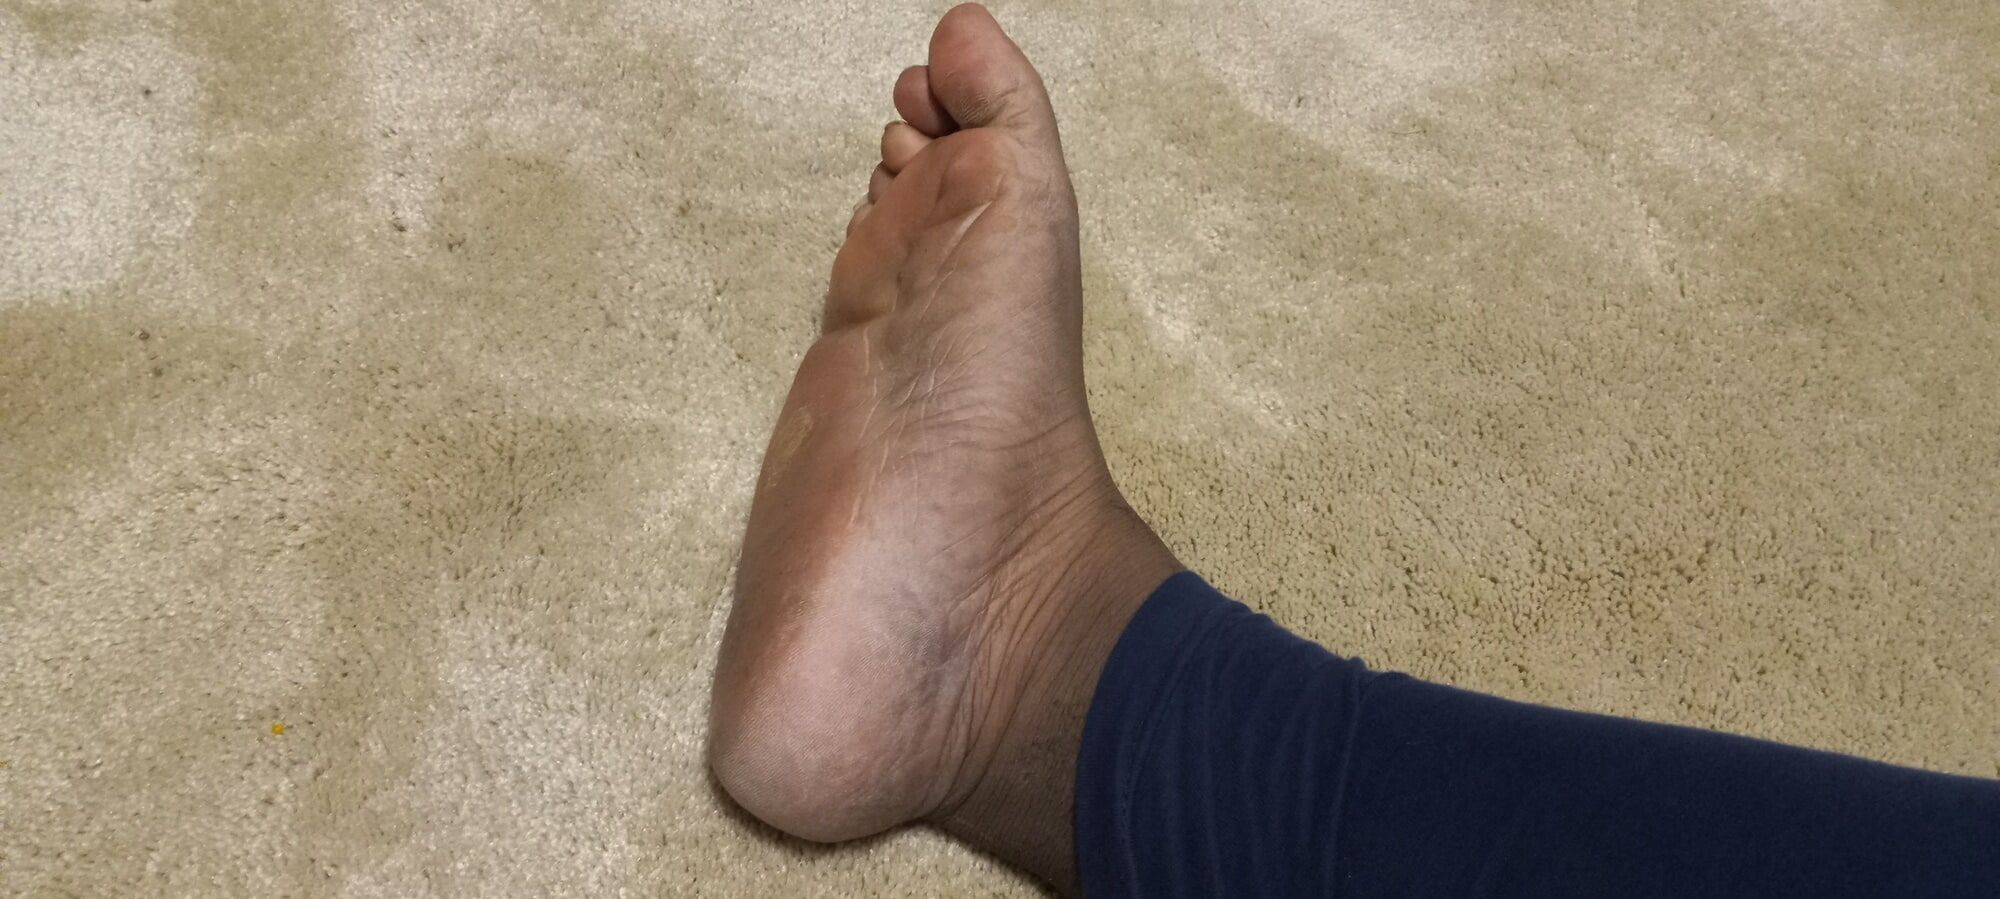 Pics of my Feet #8